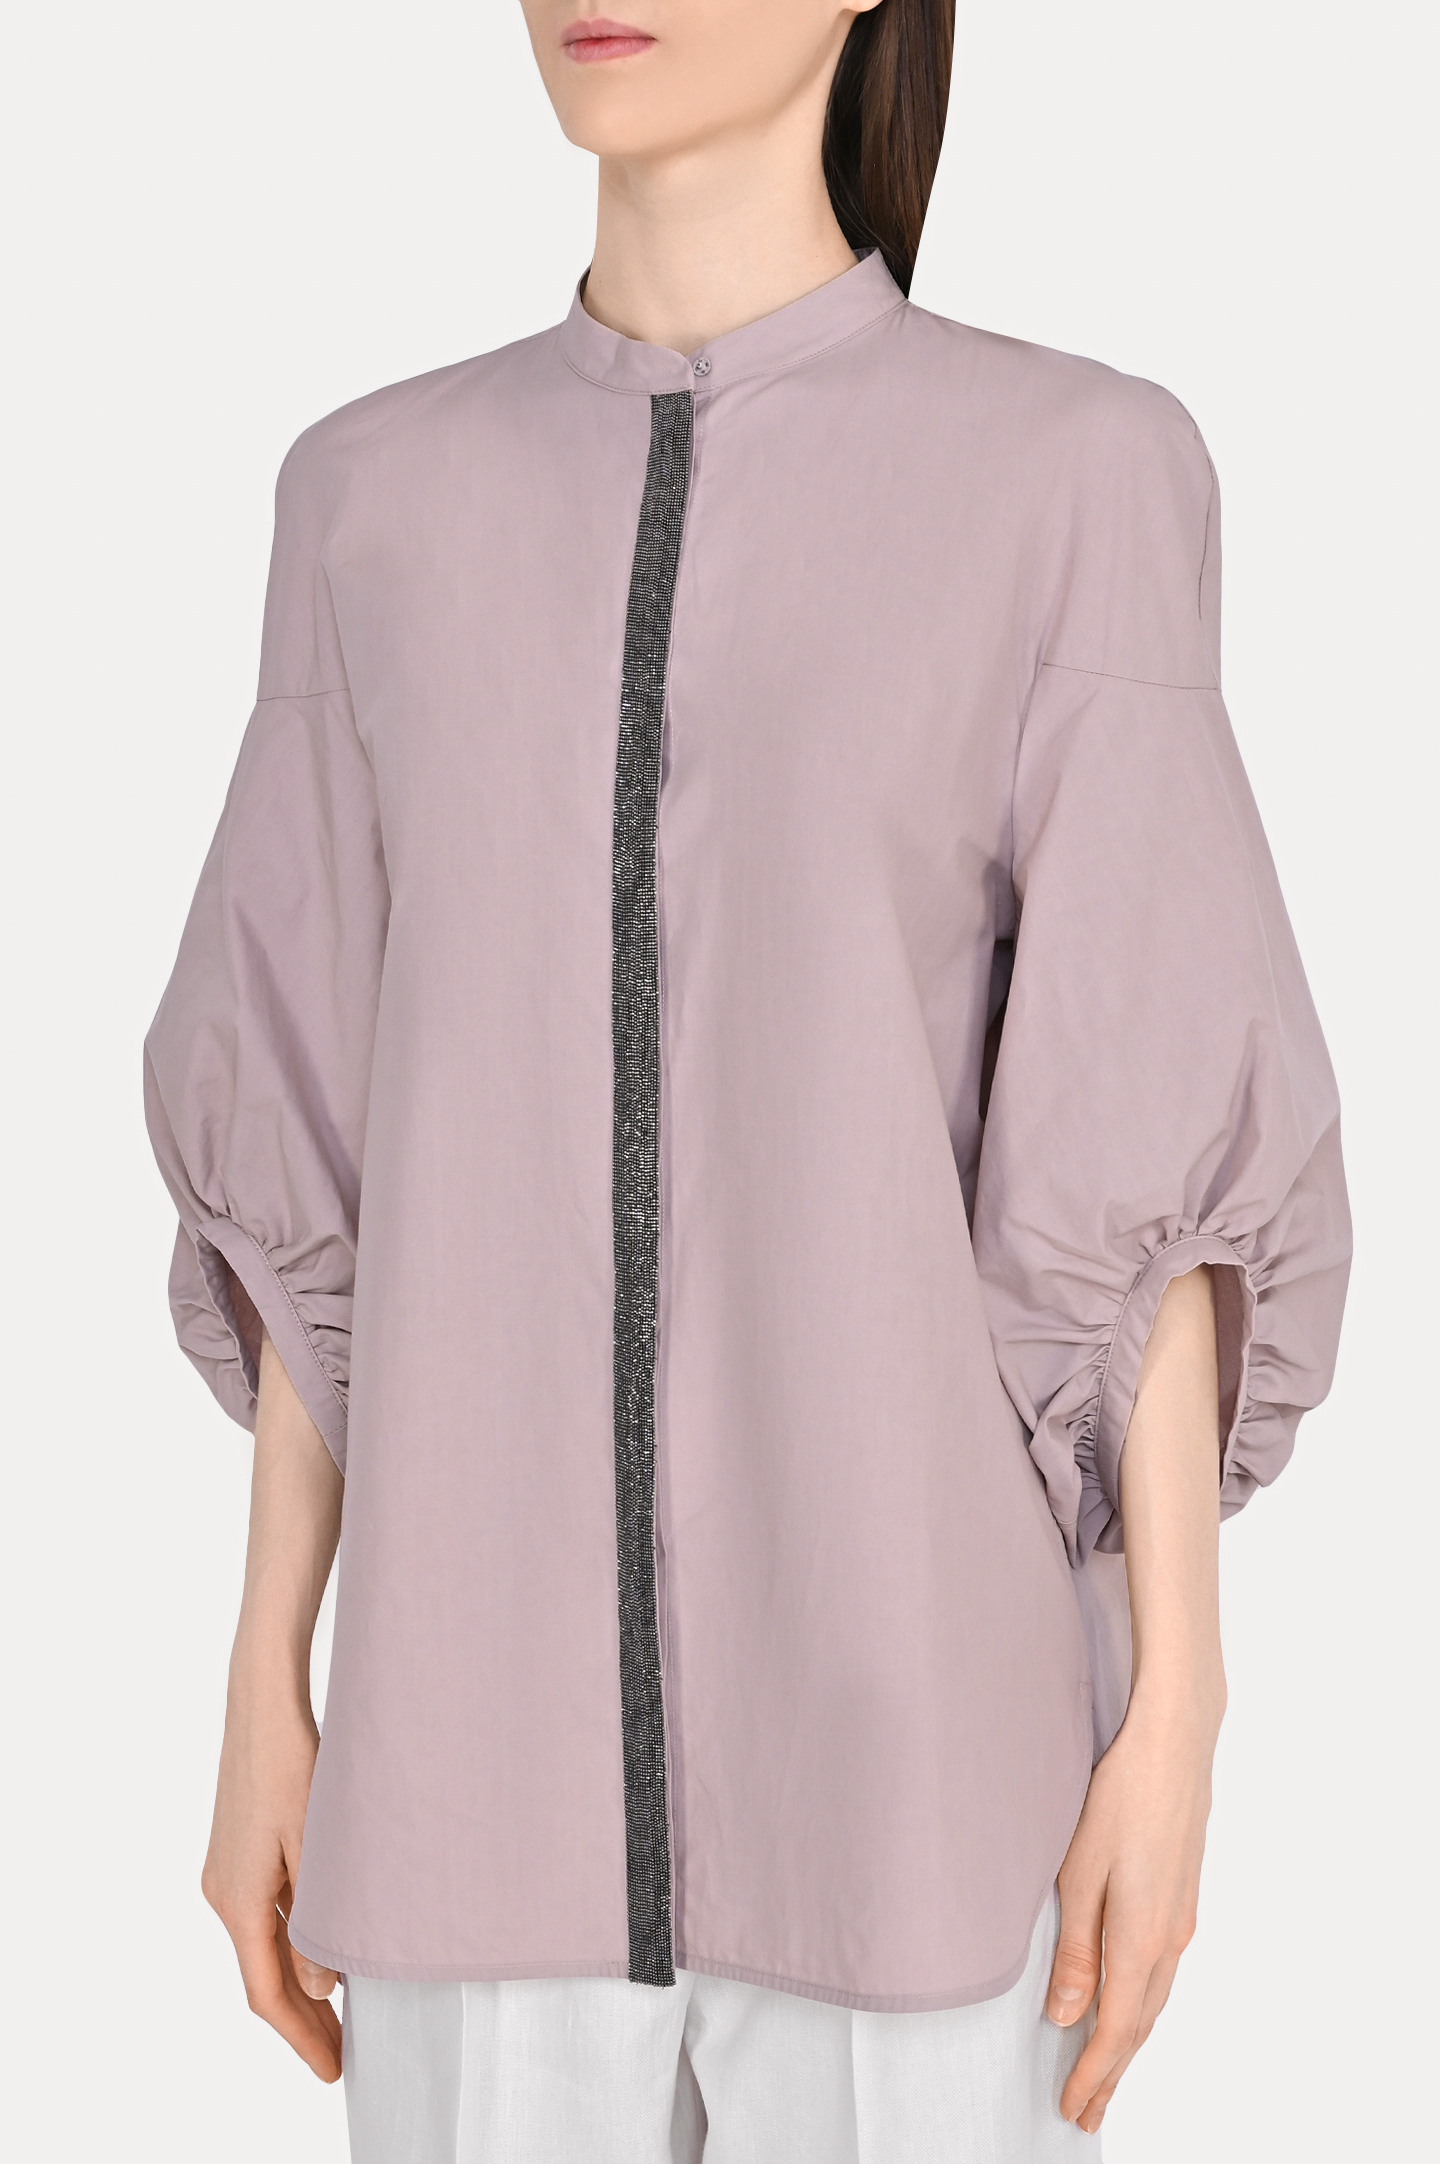 Блуза FABIANA FILIPPI CAD273B644I806, цвет: Персиковый, Женский